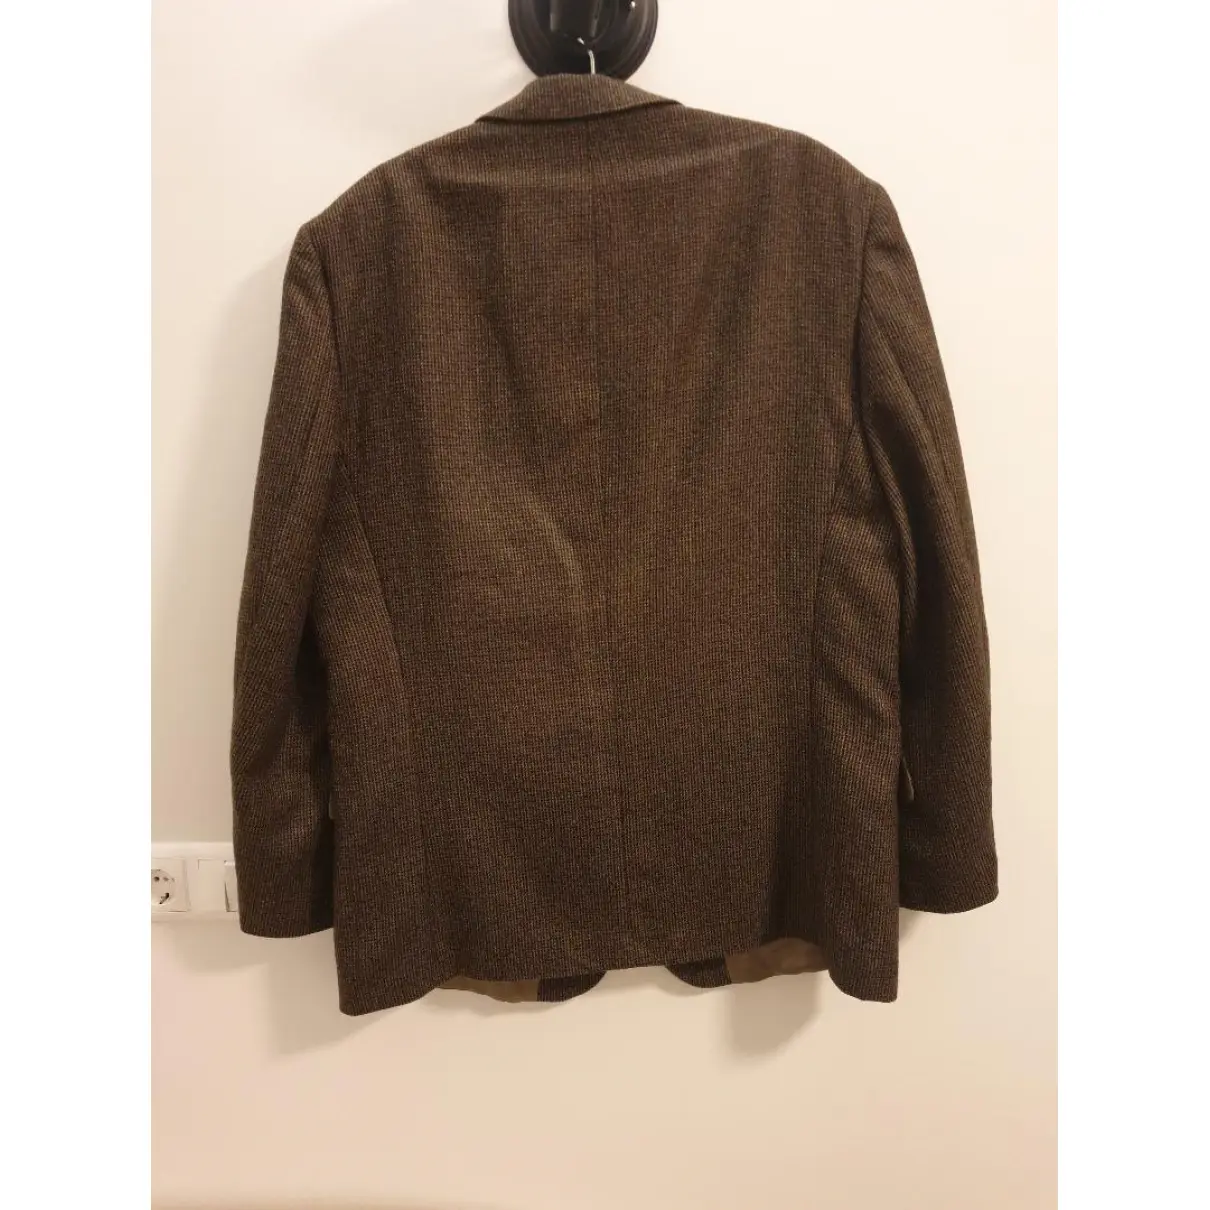 Buy Oscar De La Renta Wool jacket online